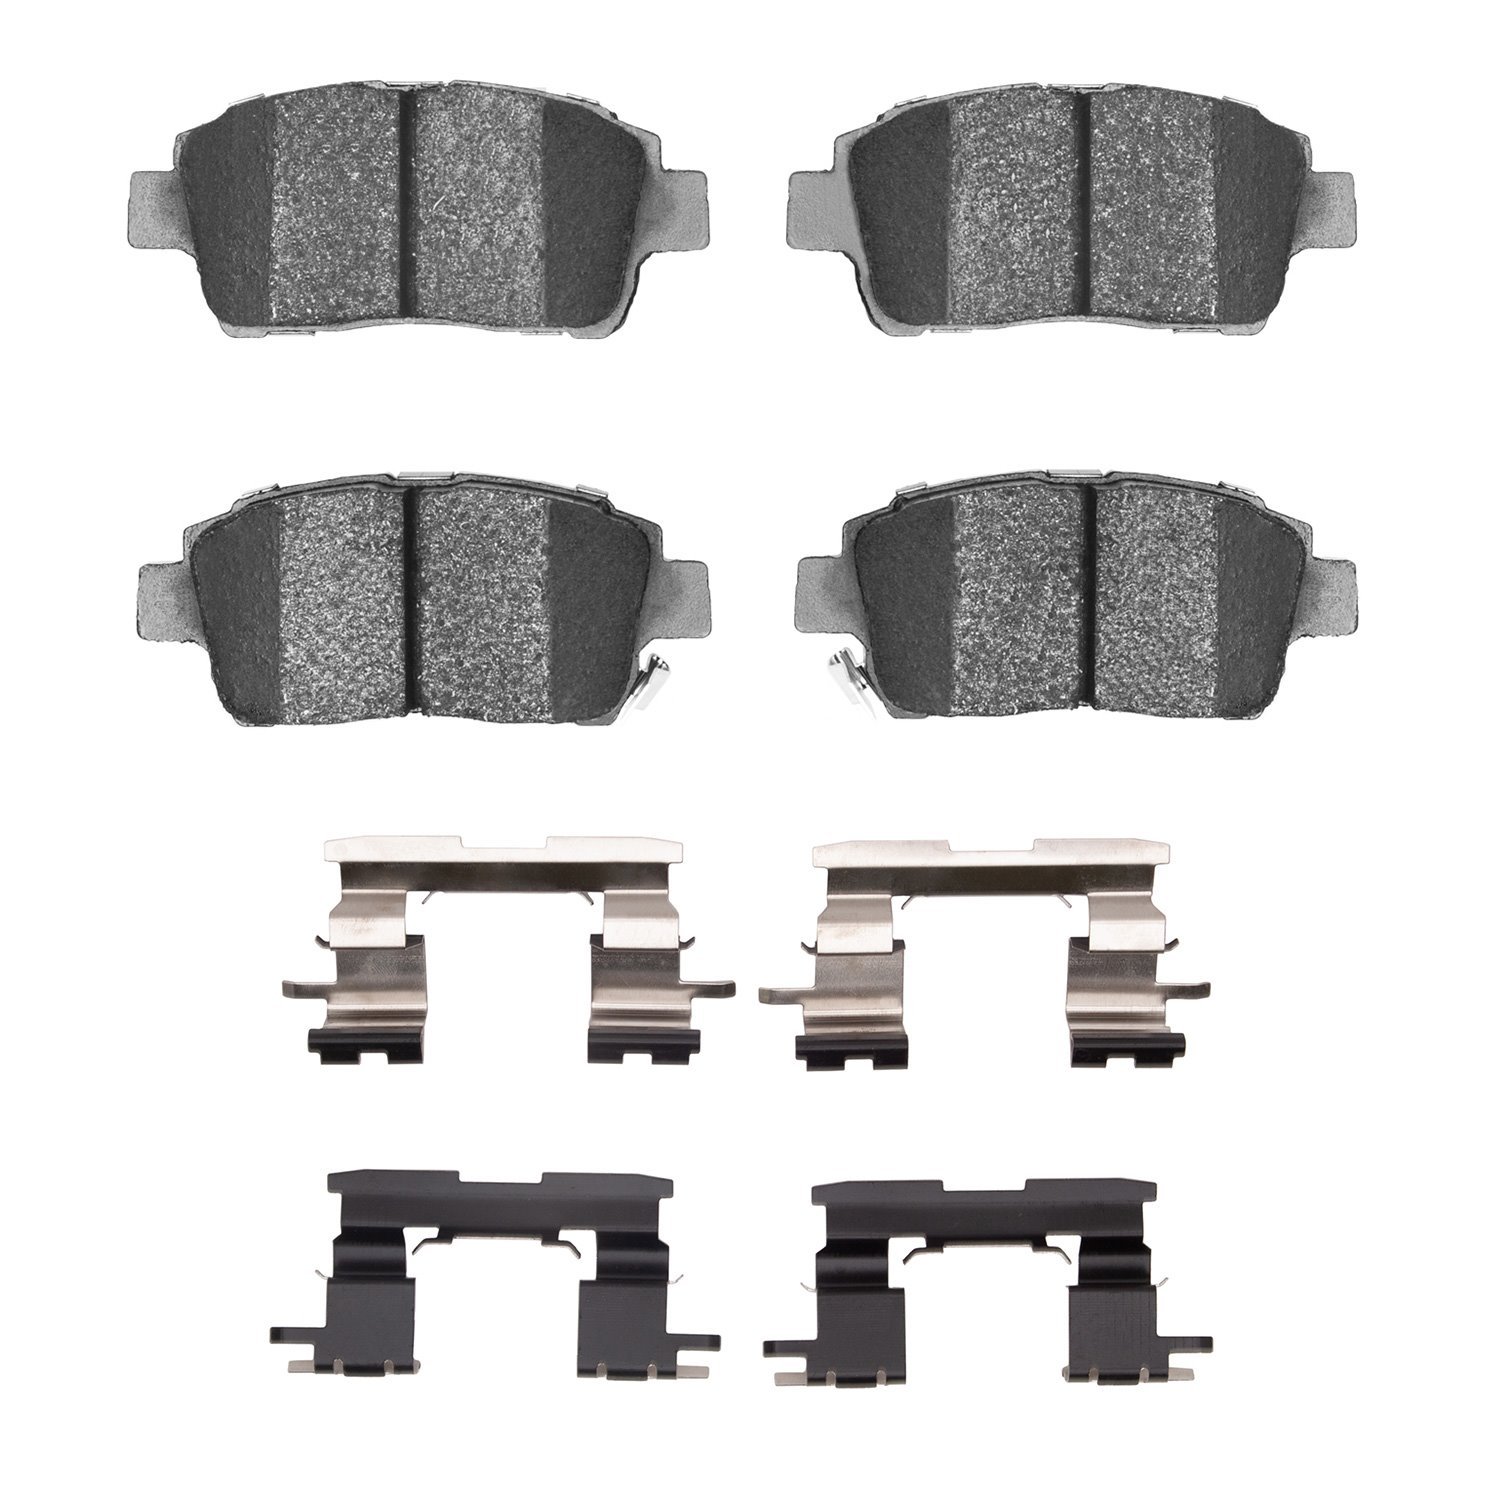 1552-0822-02 5000 Advanced Ceramic Brake Pads & Hardware Kit, 2000-2000 Lexus/Toyota/Scion, Position: Front